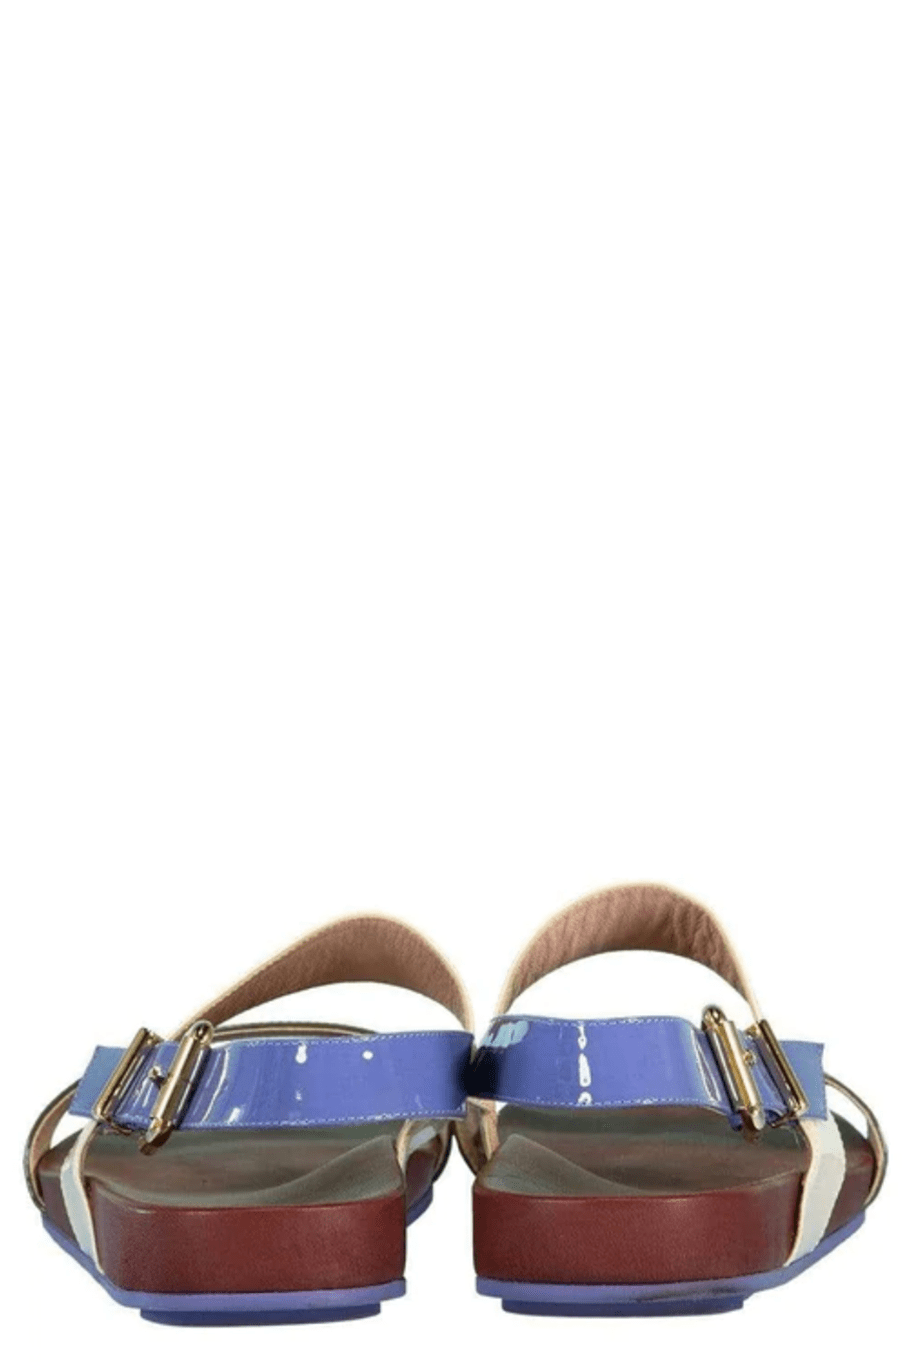 FENDI-Multi-Color Strap Sandal-MULTI